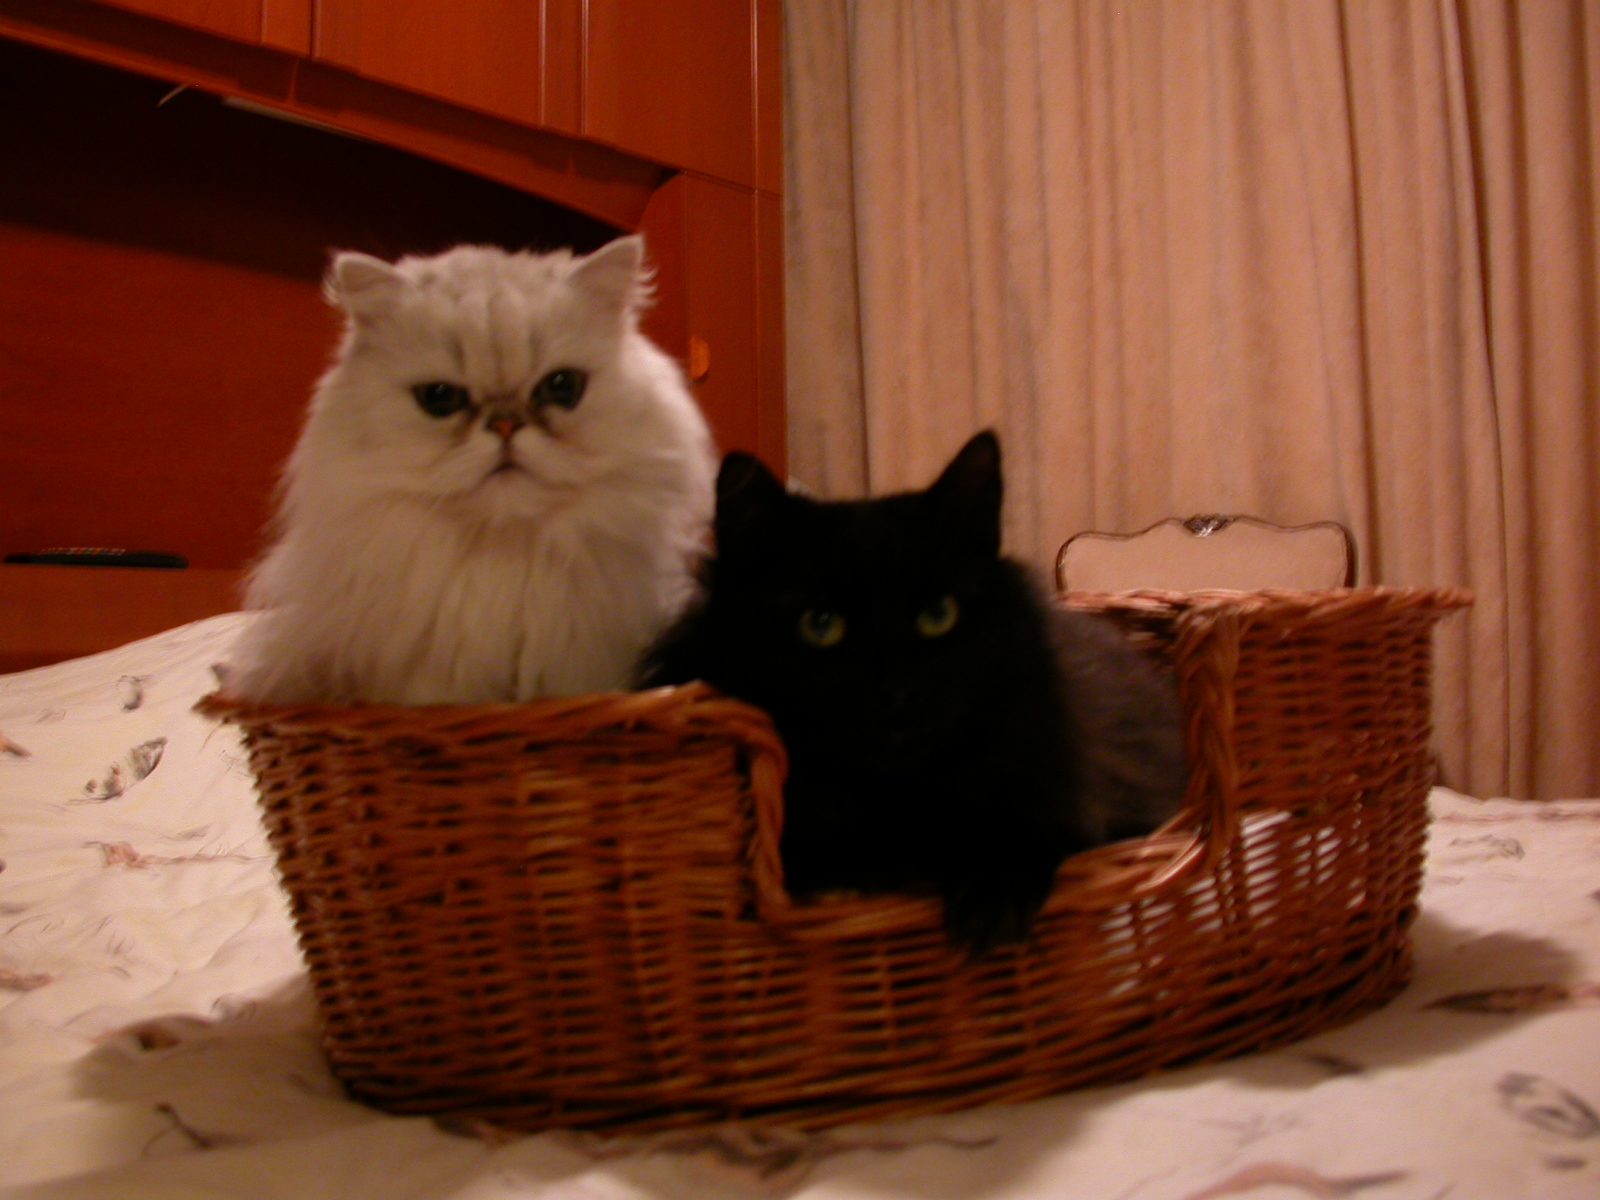 eva nature animals land cat cats basket white black front angora royalty free